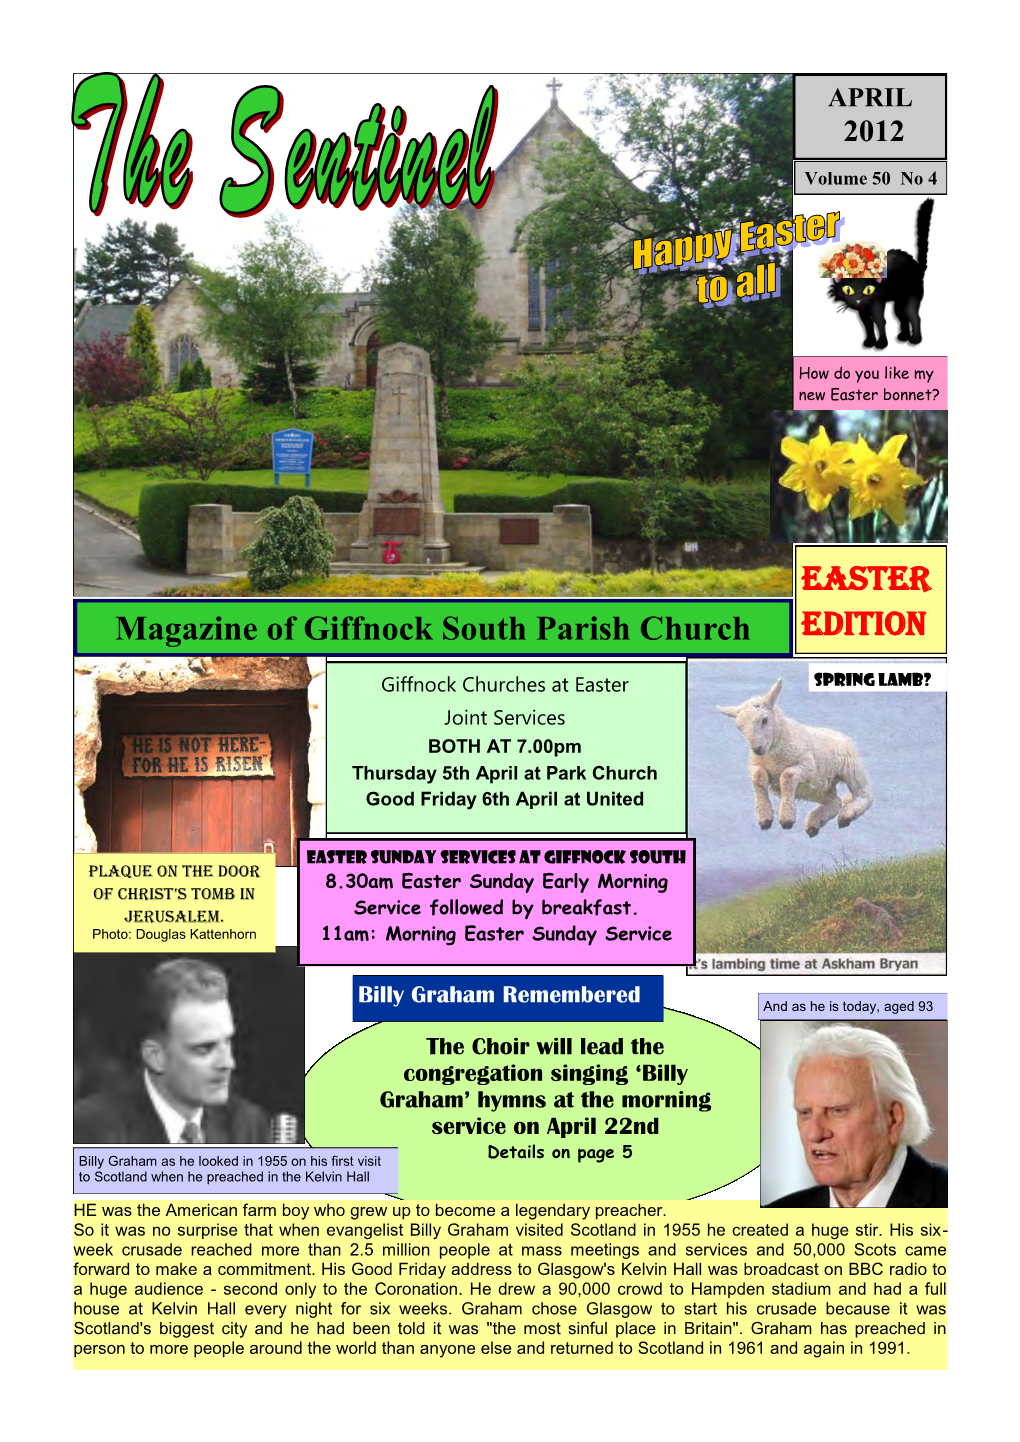 Magazine of Giffnock South Parish Church EASTER EDITION